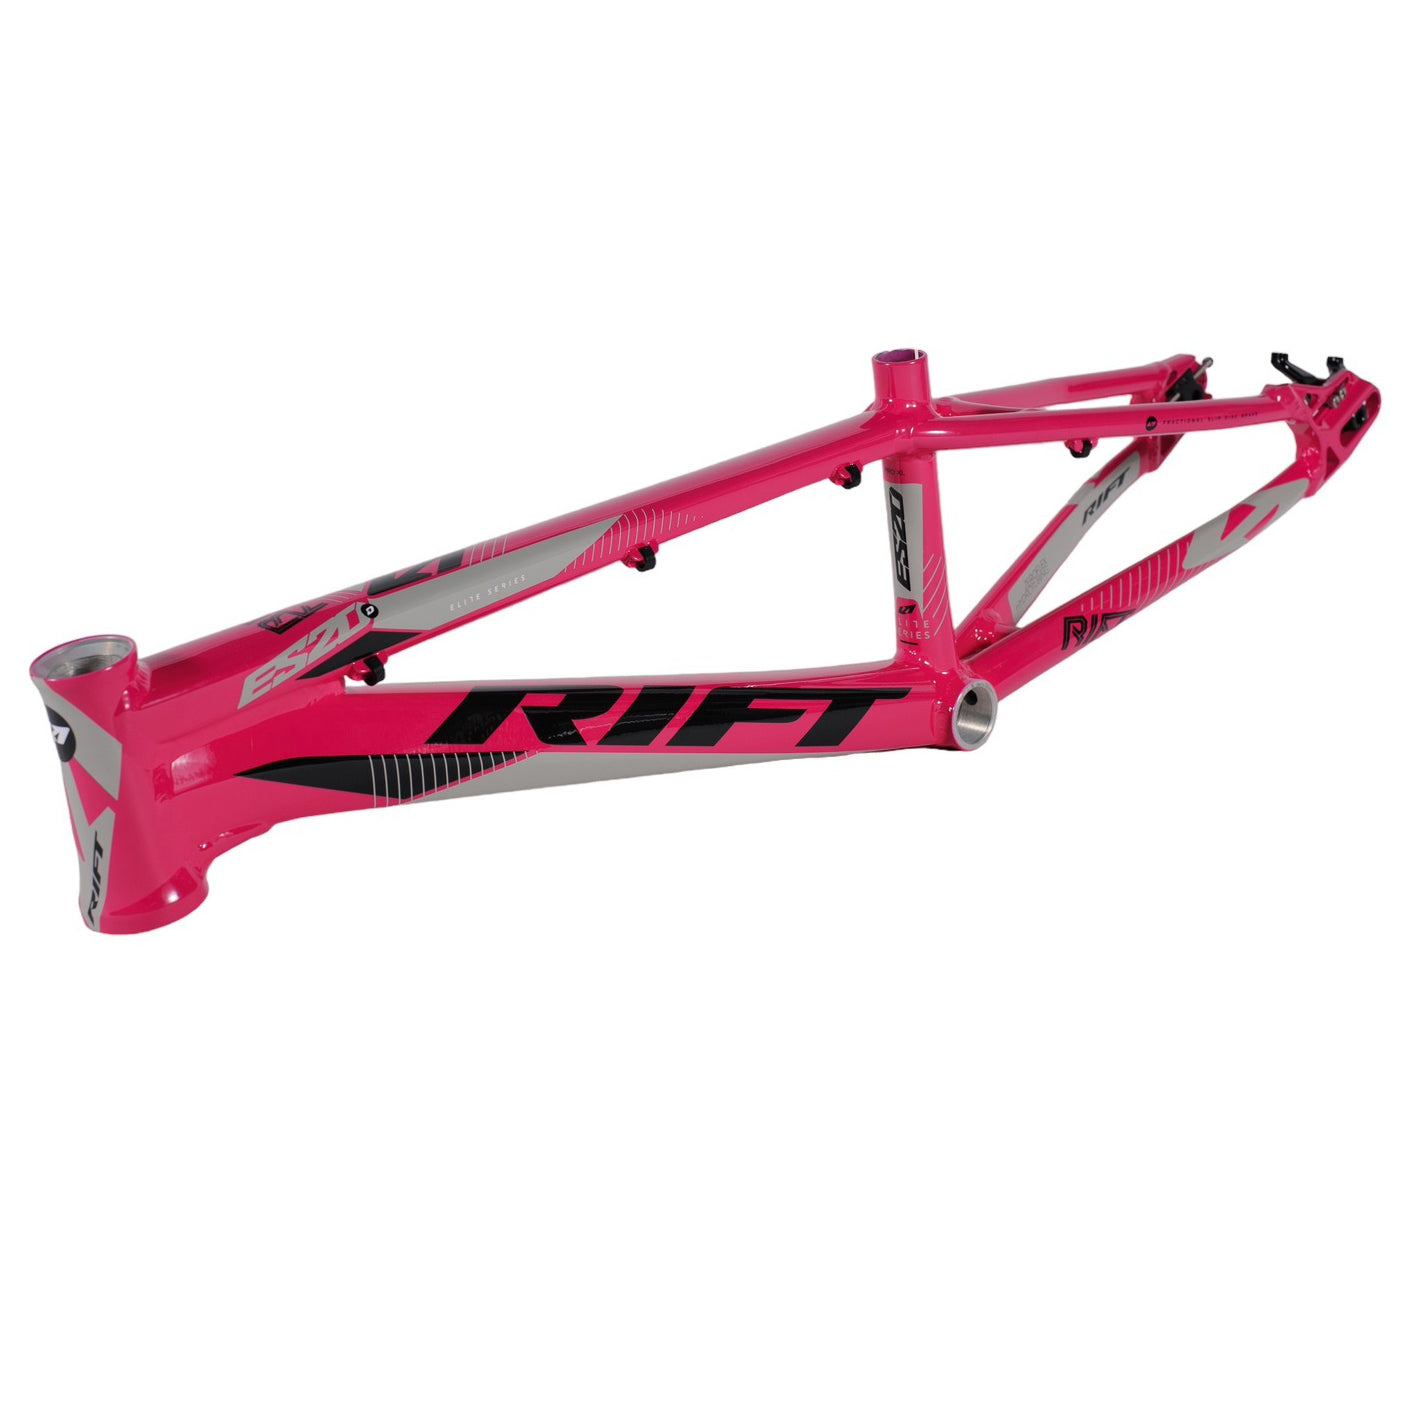 A Rift ES20D Frame Pro L bike frame on a white background.